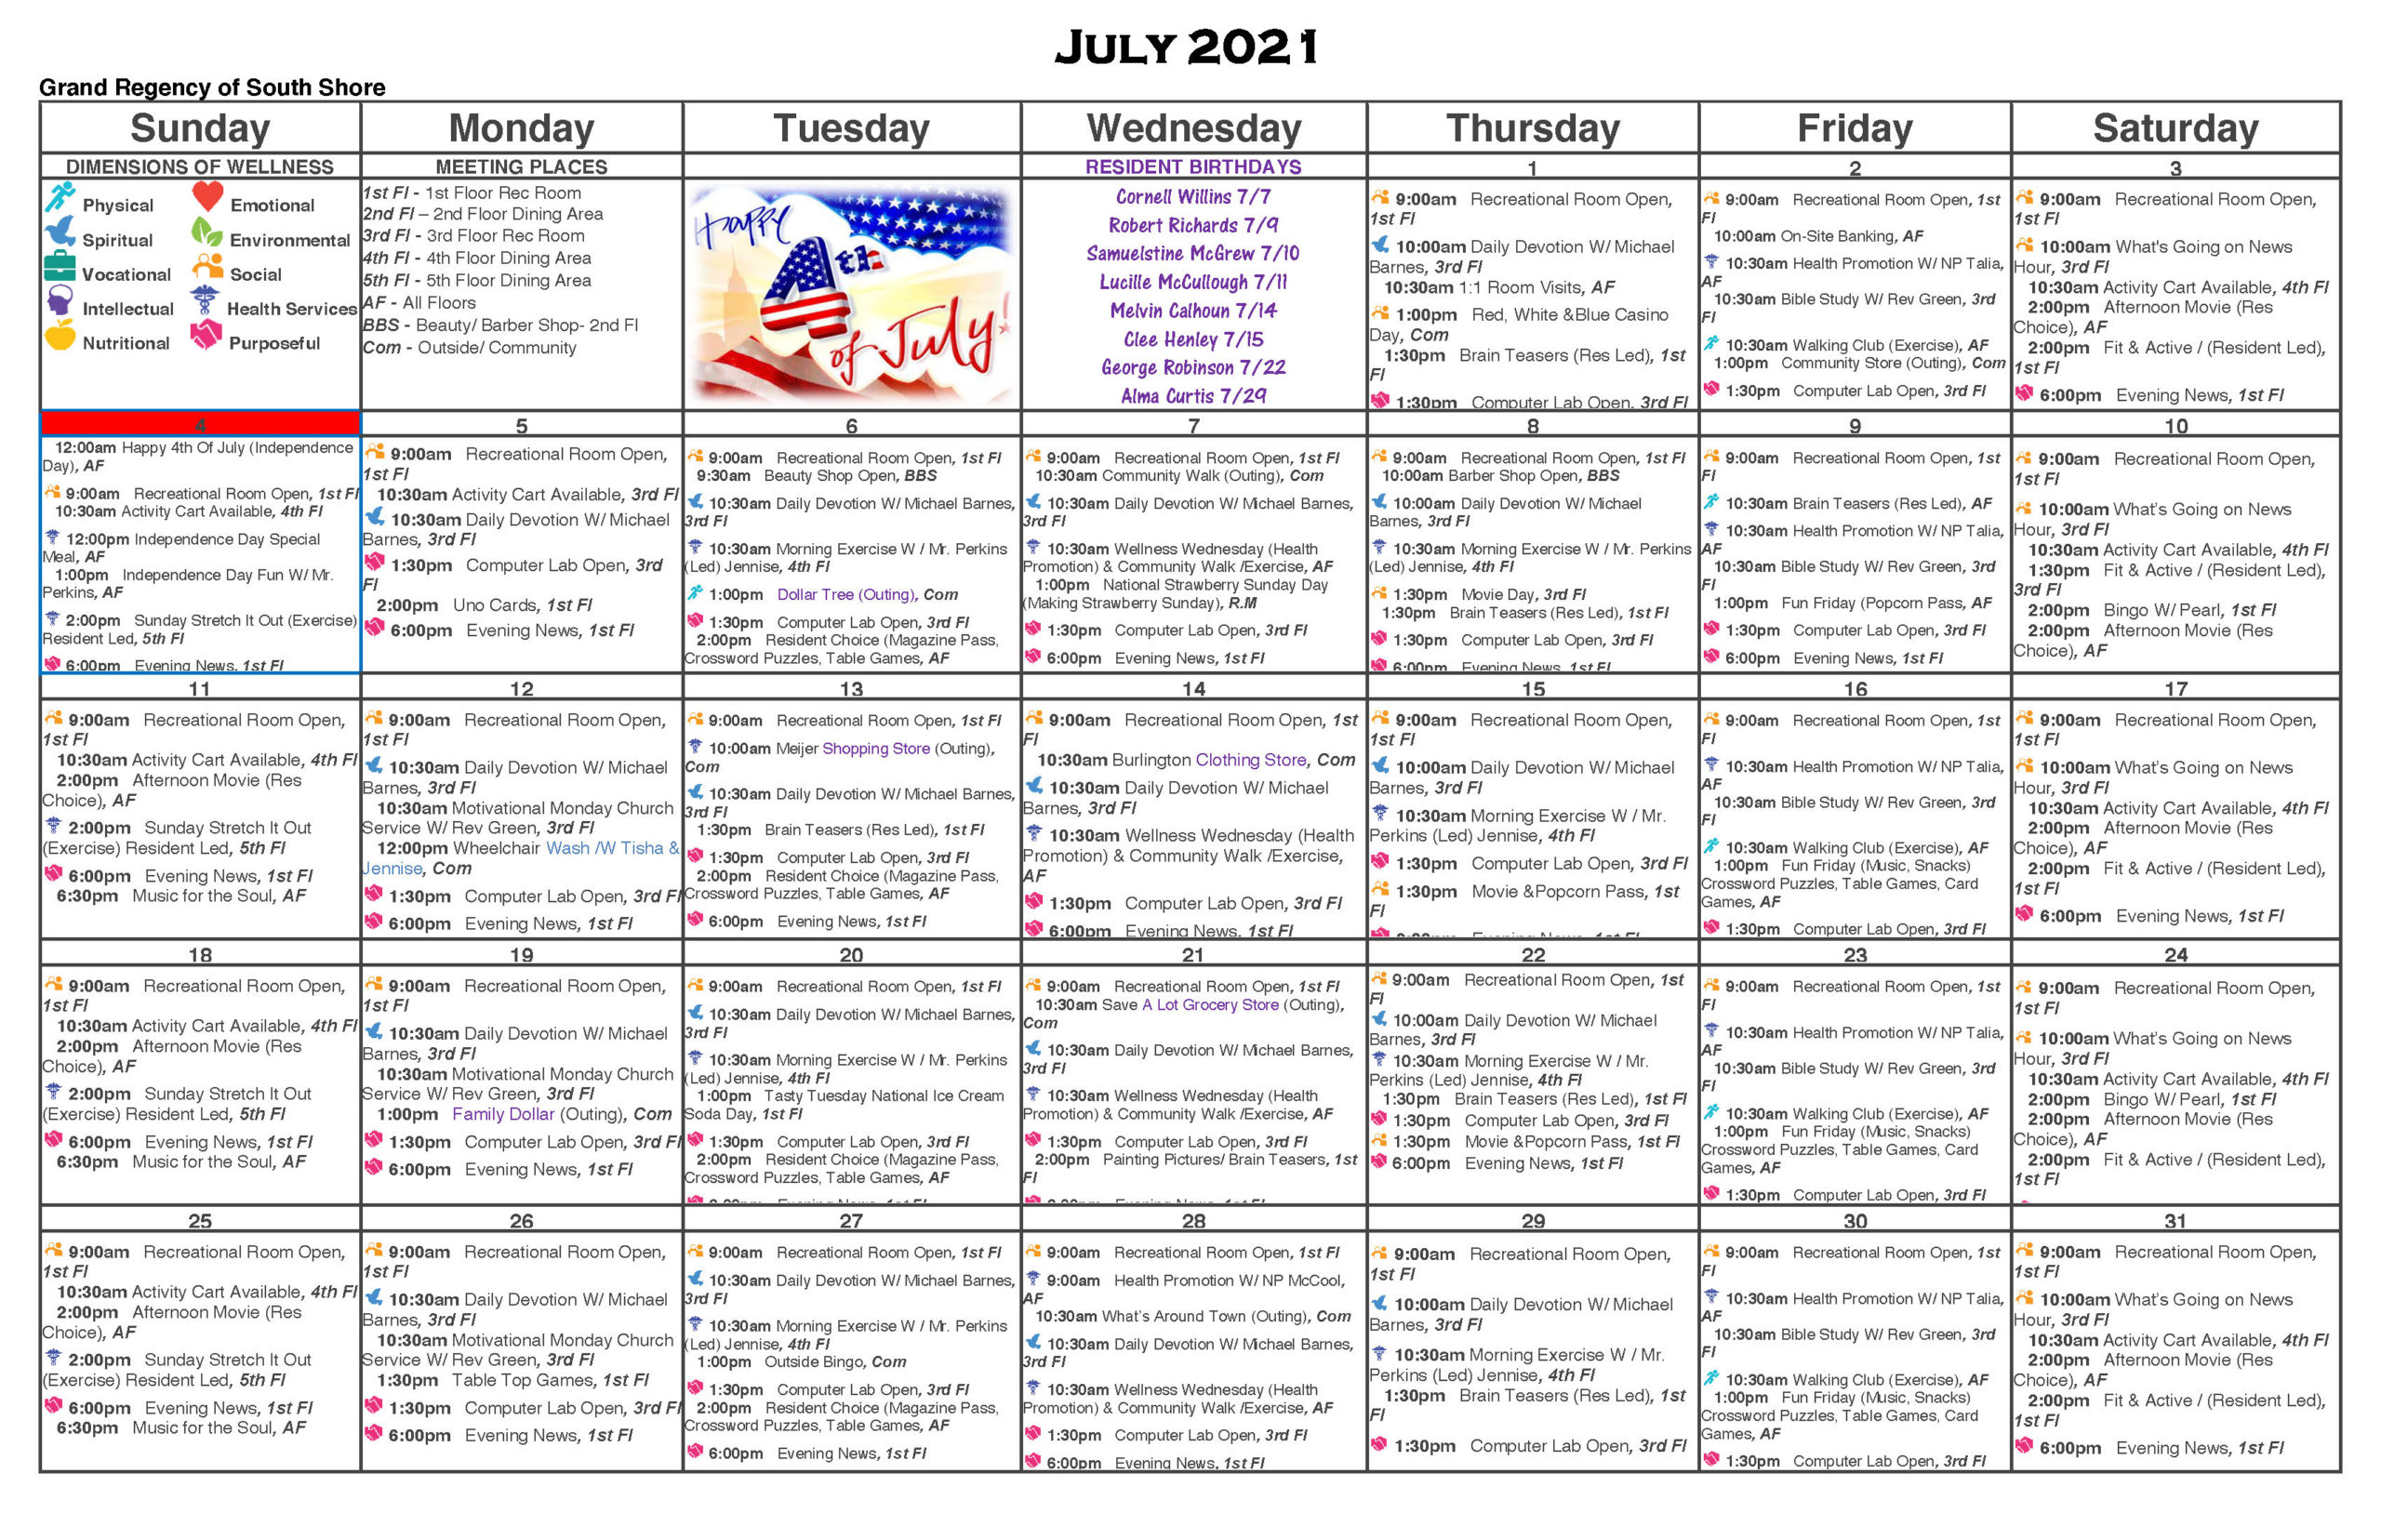 Grand Regency of South Shore July 2021 Calendar of Activities